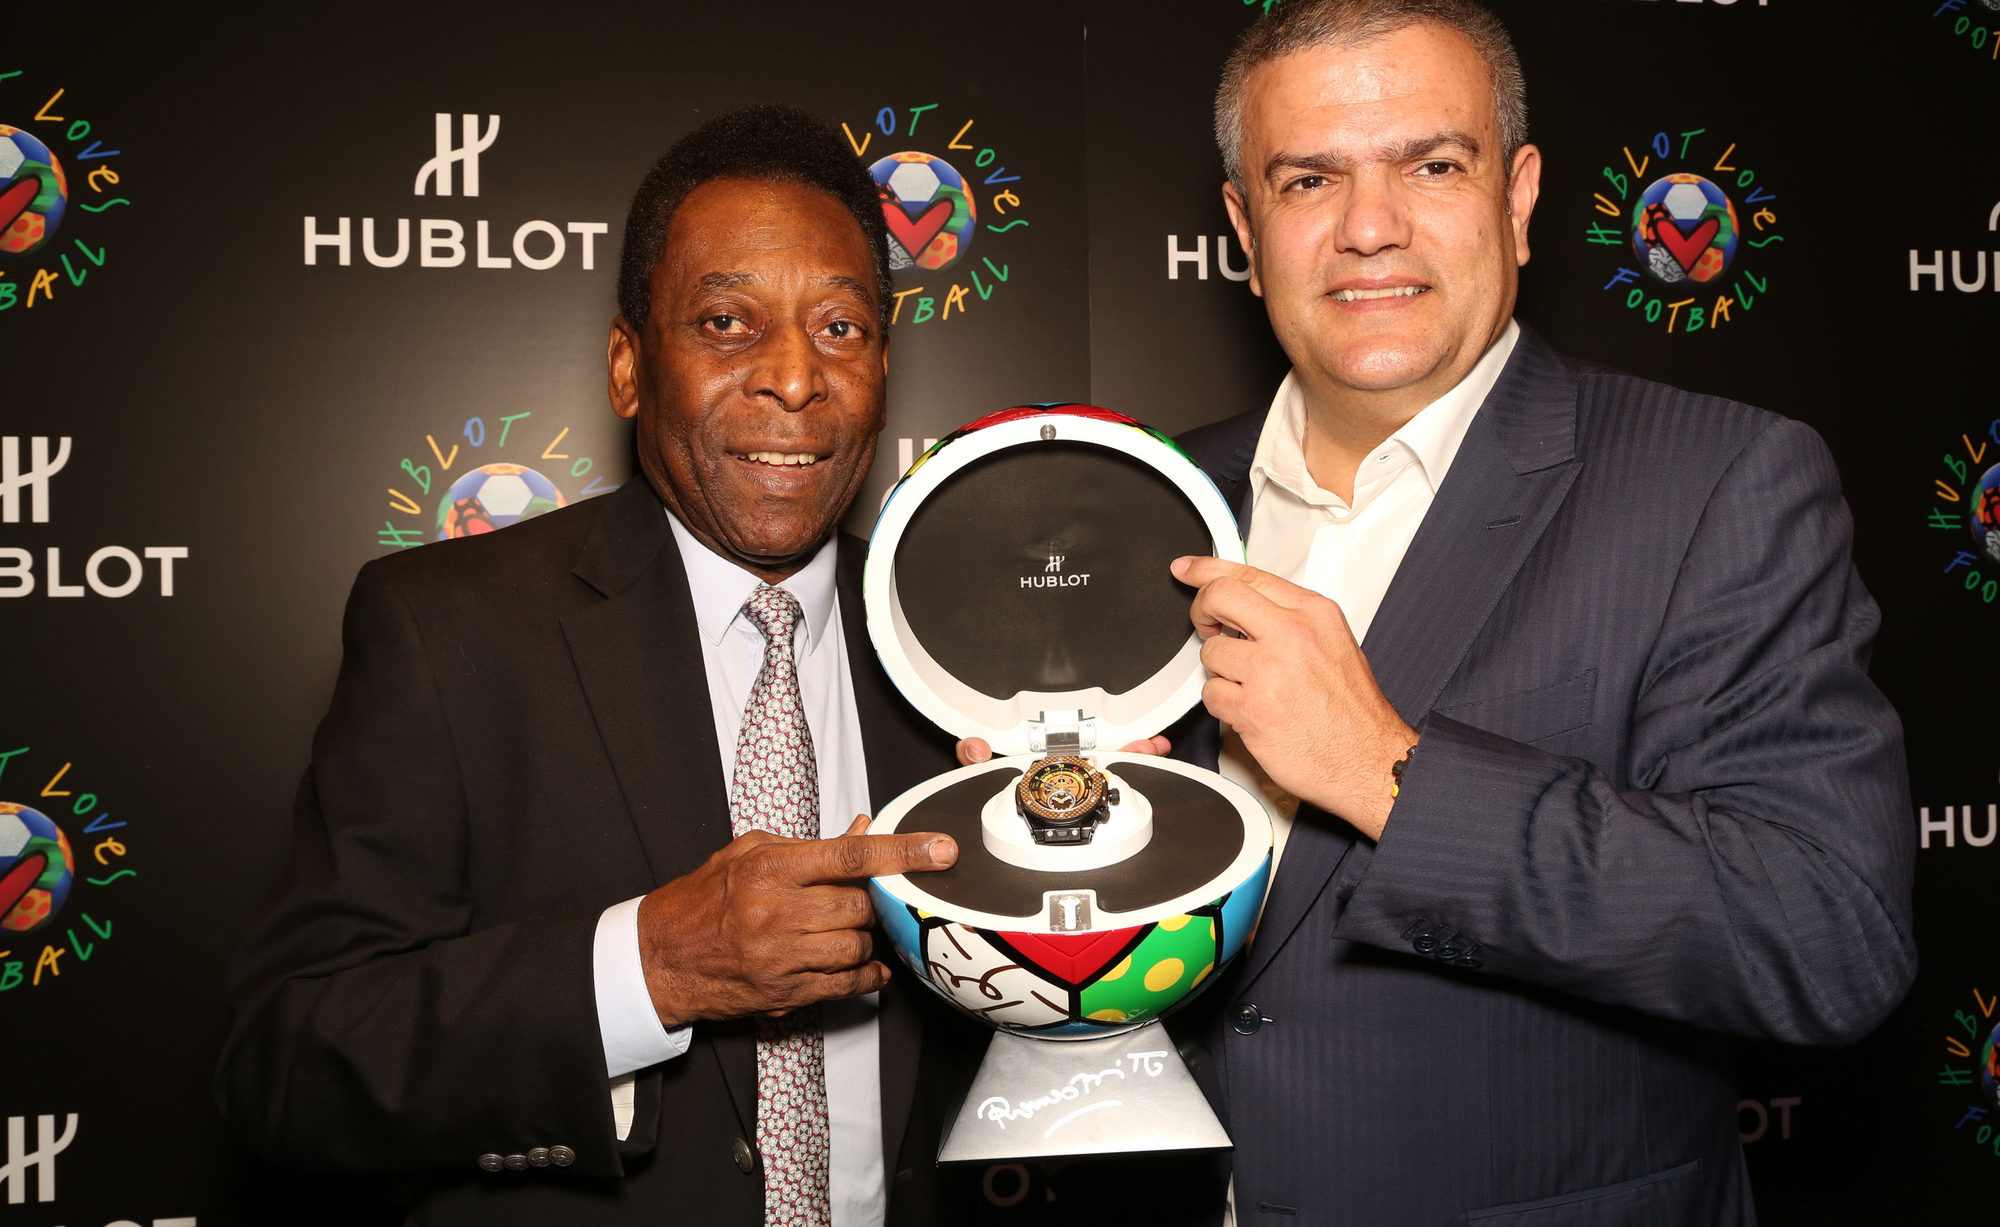 Hublot and Pelé bring “Hublot Loves Football” Global